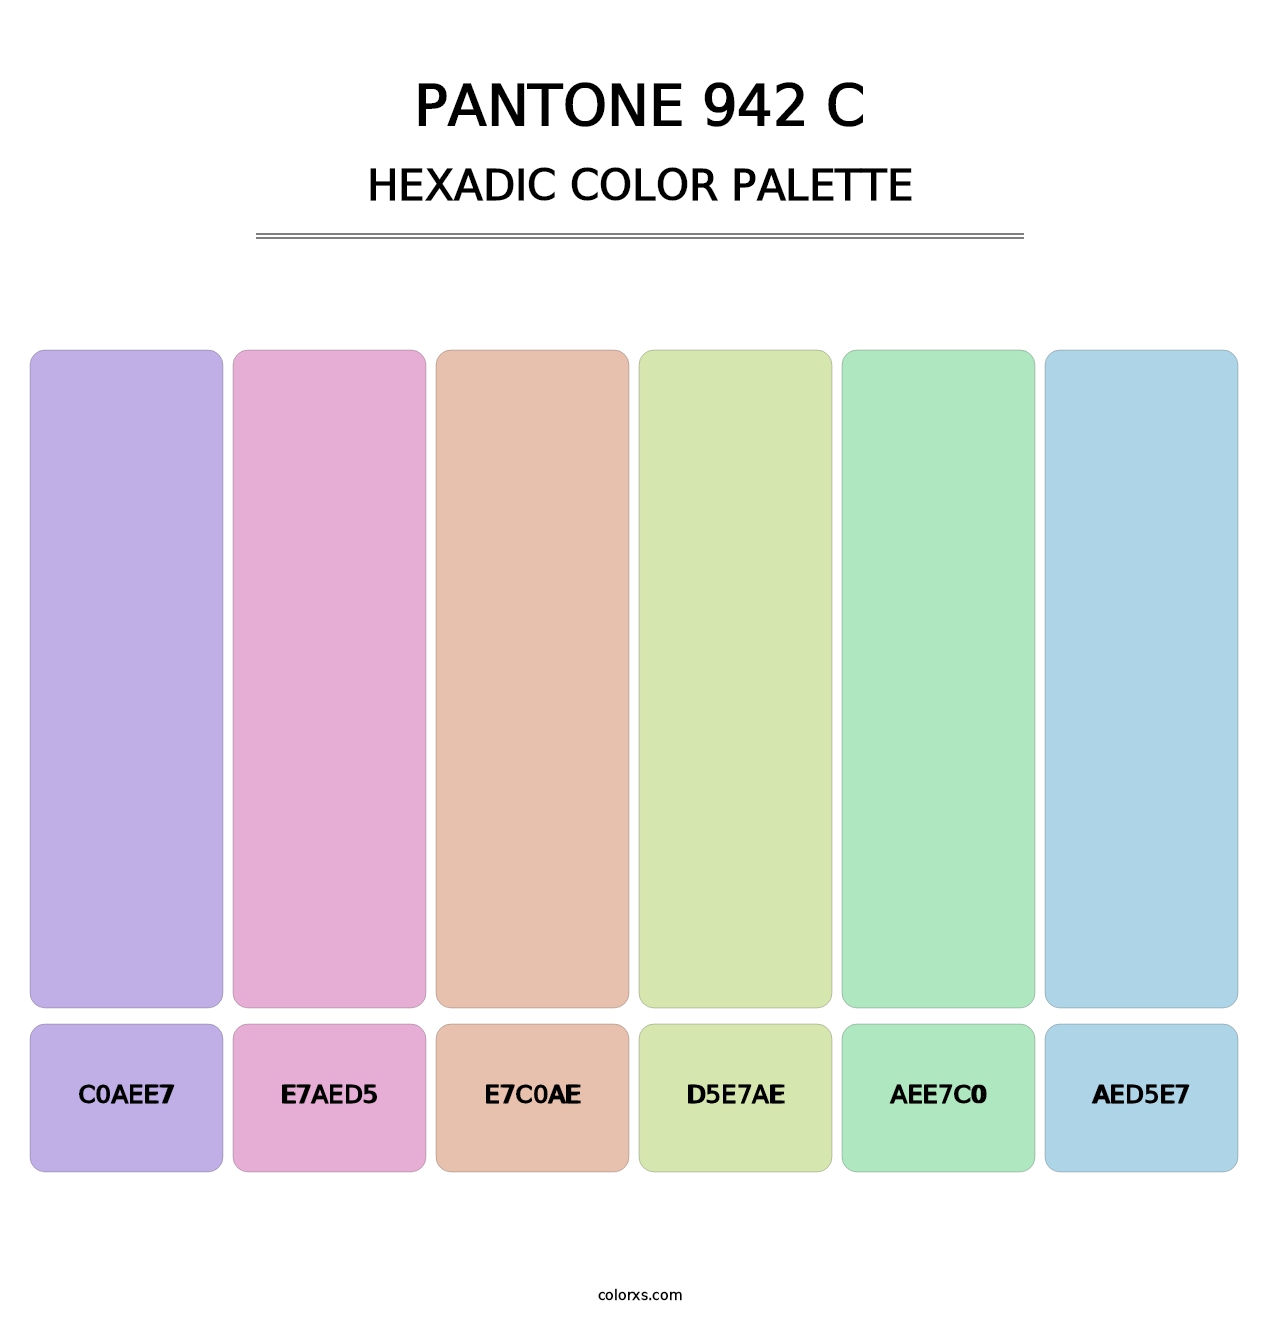 PANTONE 942 C - Hexadic Color Palette